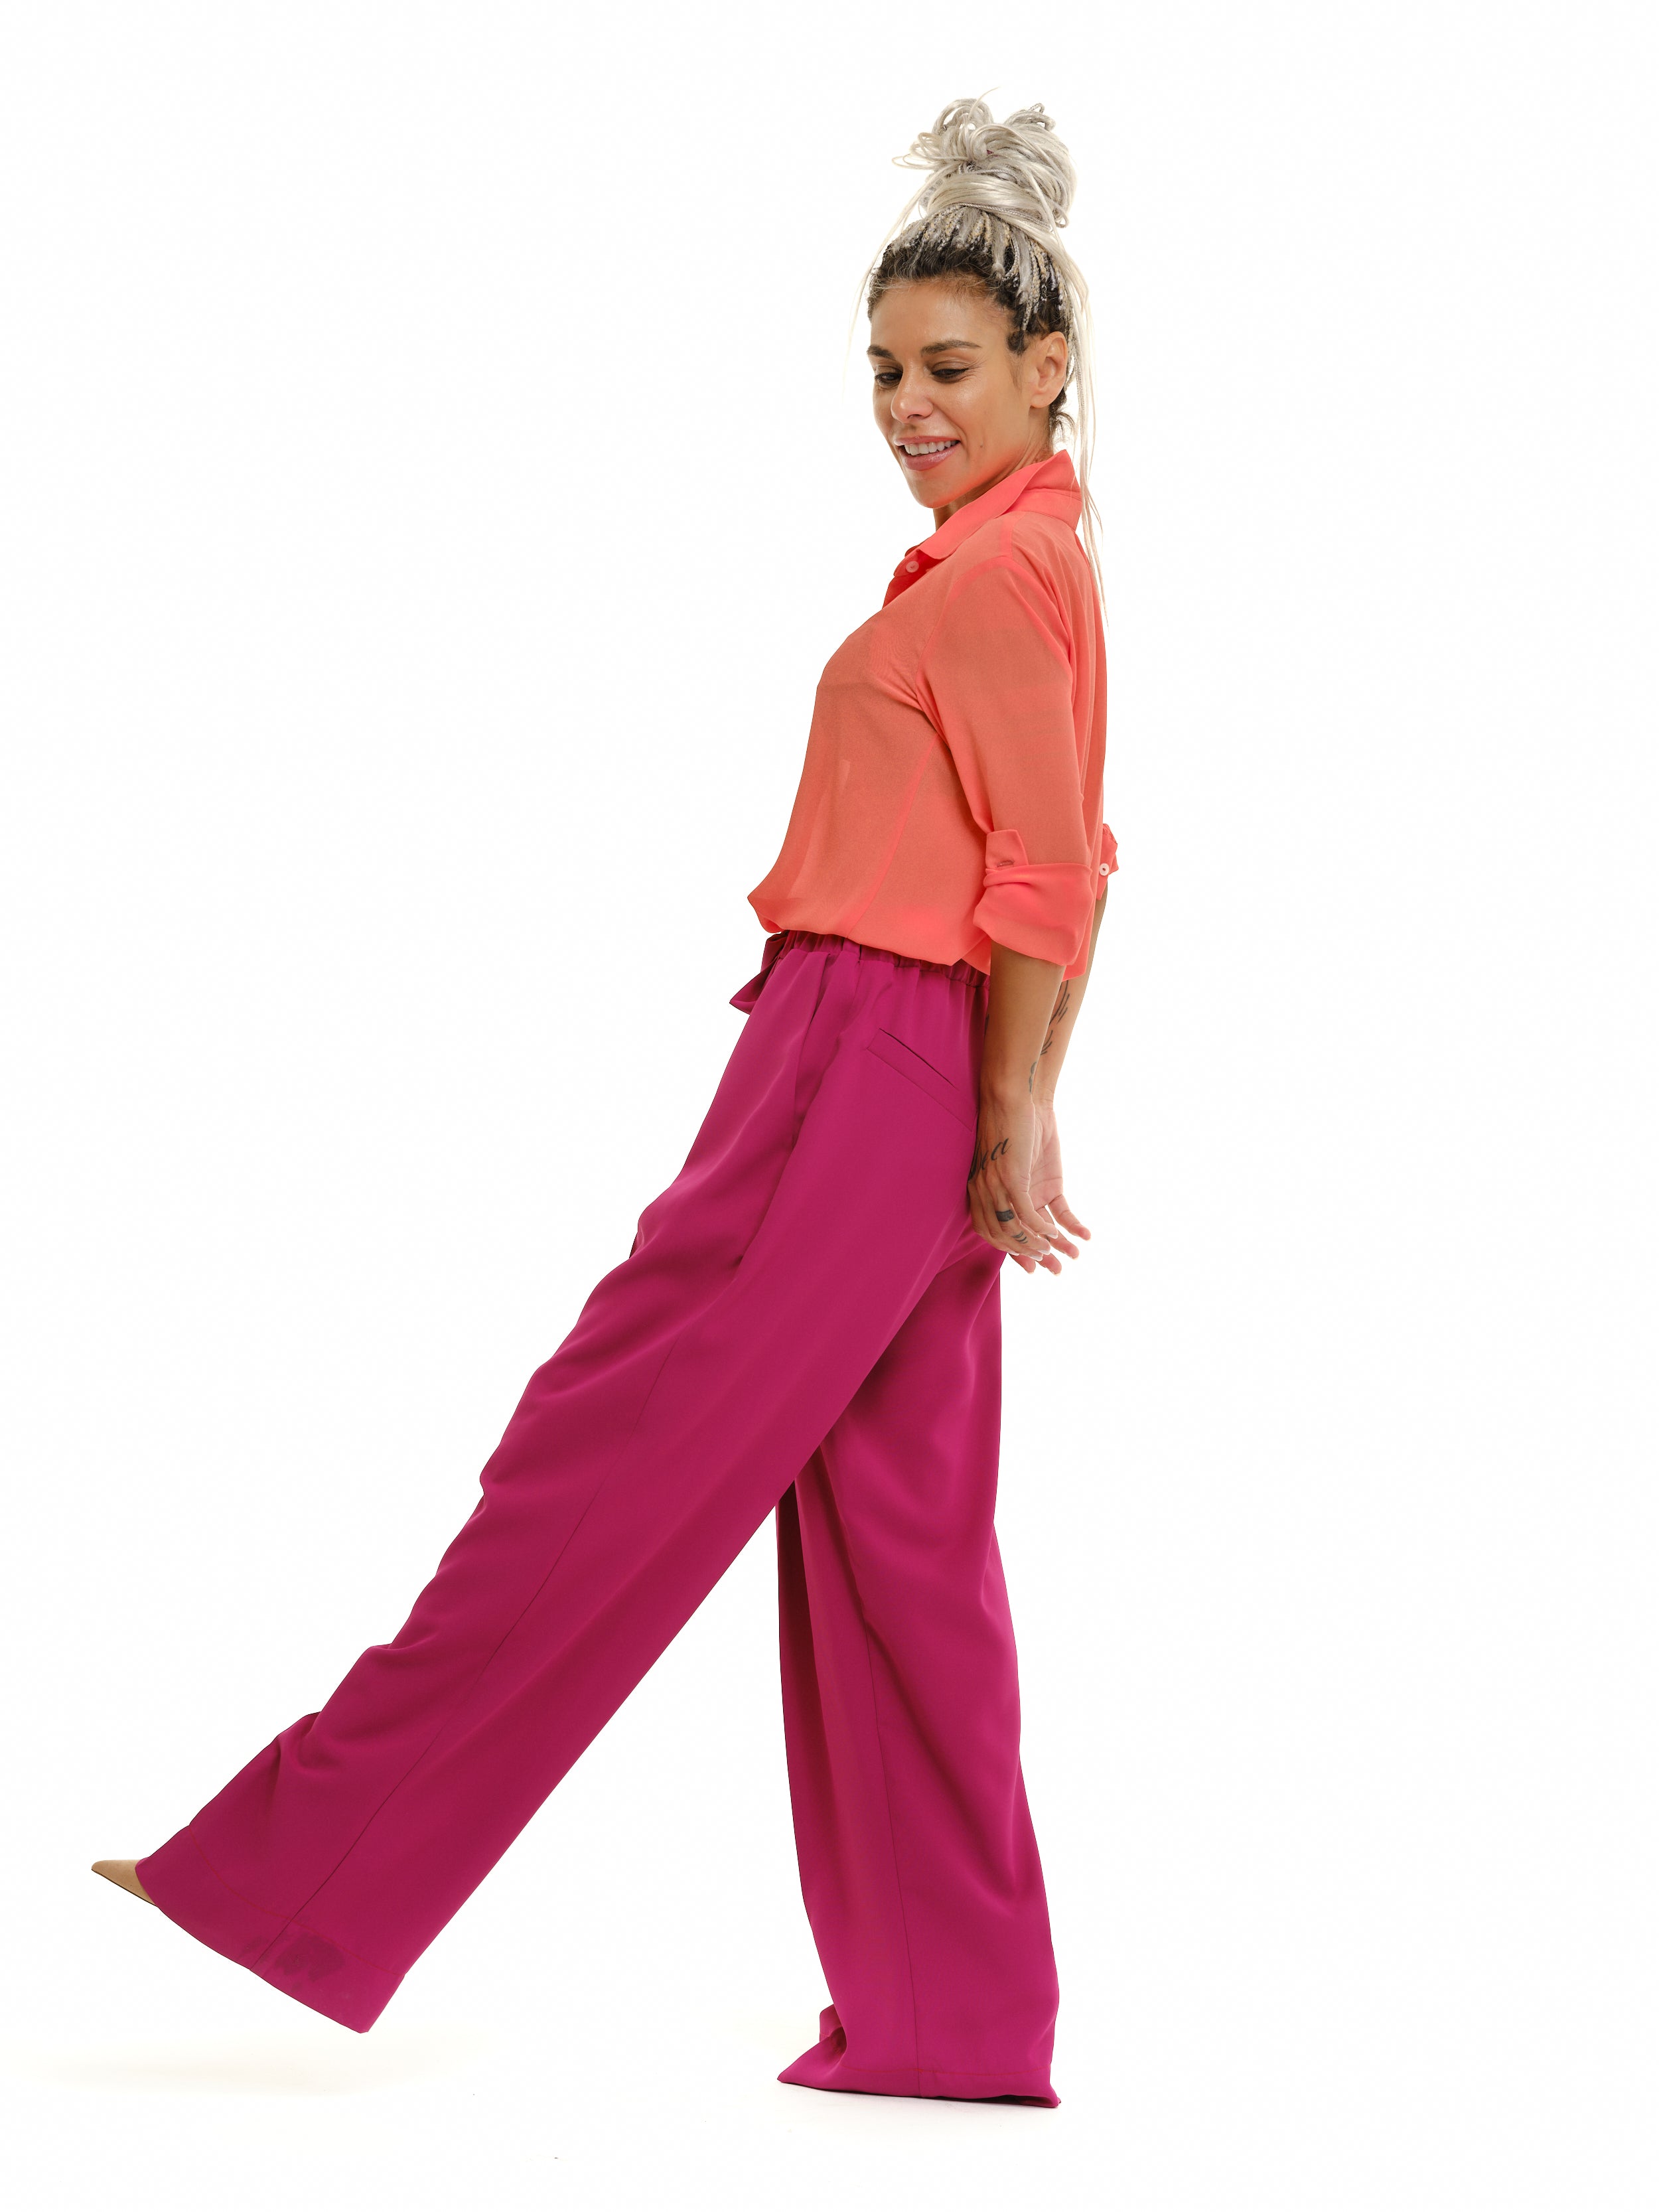 Neon Pink Top + Magenta Pants Outfit Set